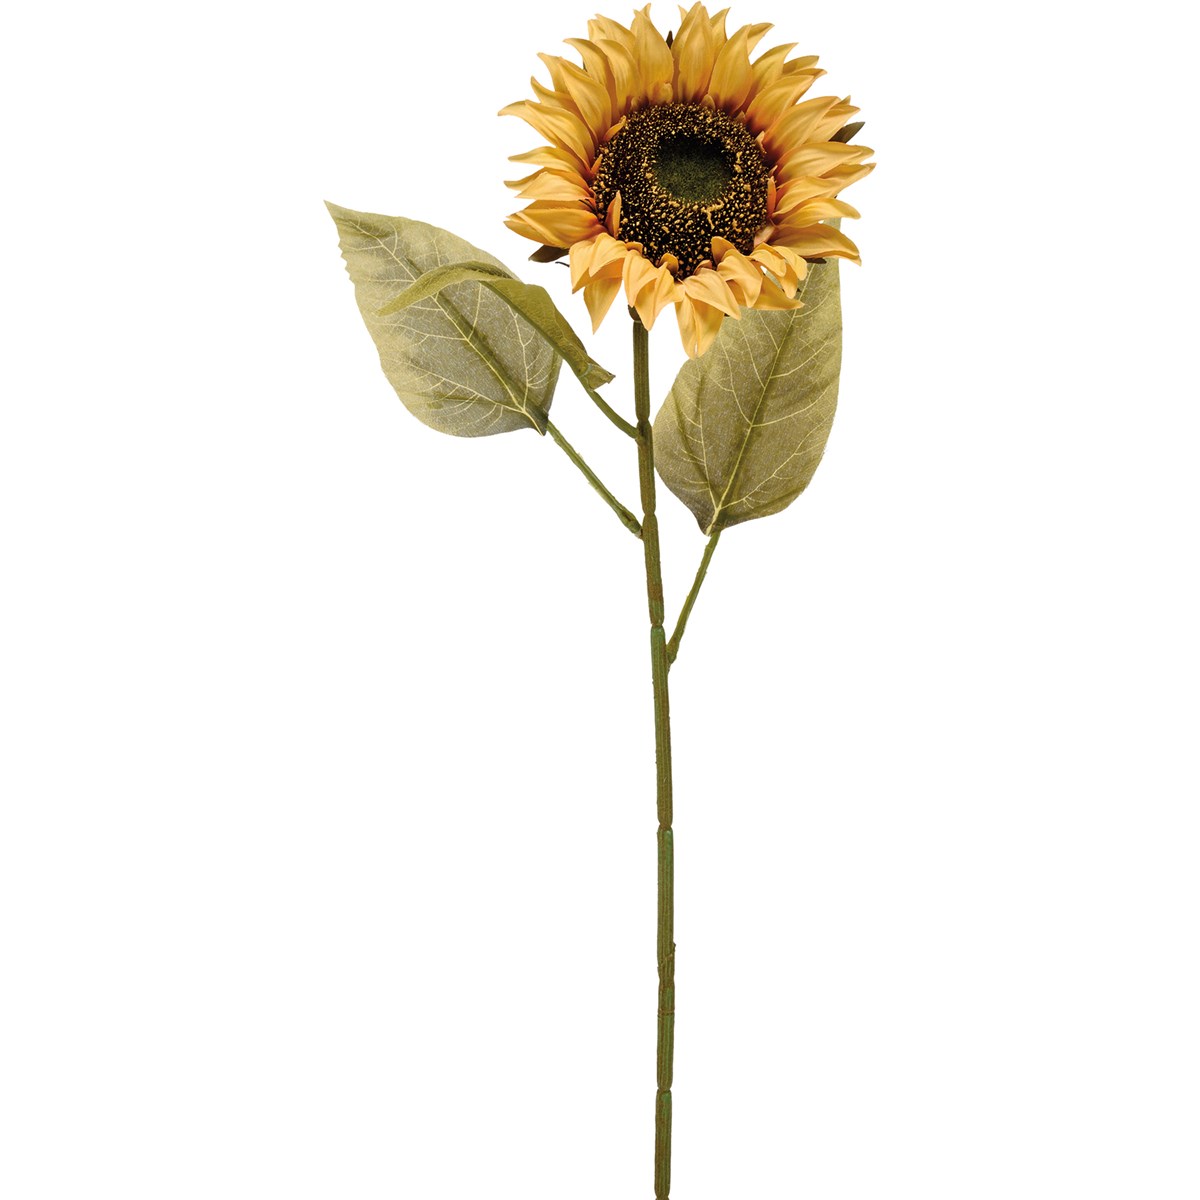 Pick - Sunflower Stem - 28" Tall - Plastic, Wire, Fabric